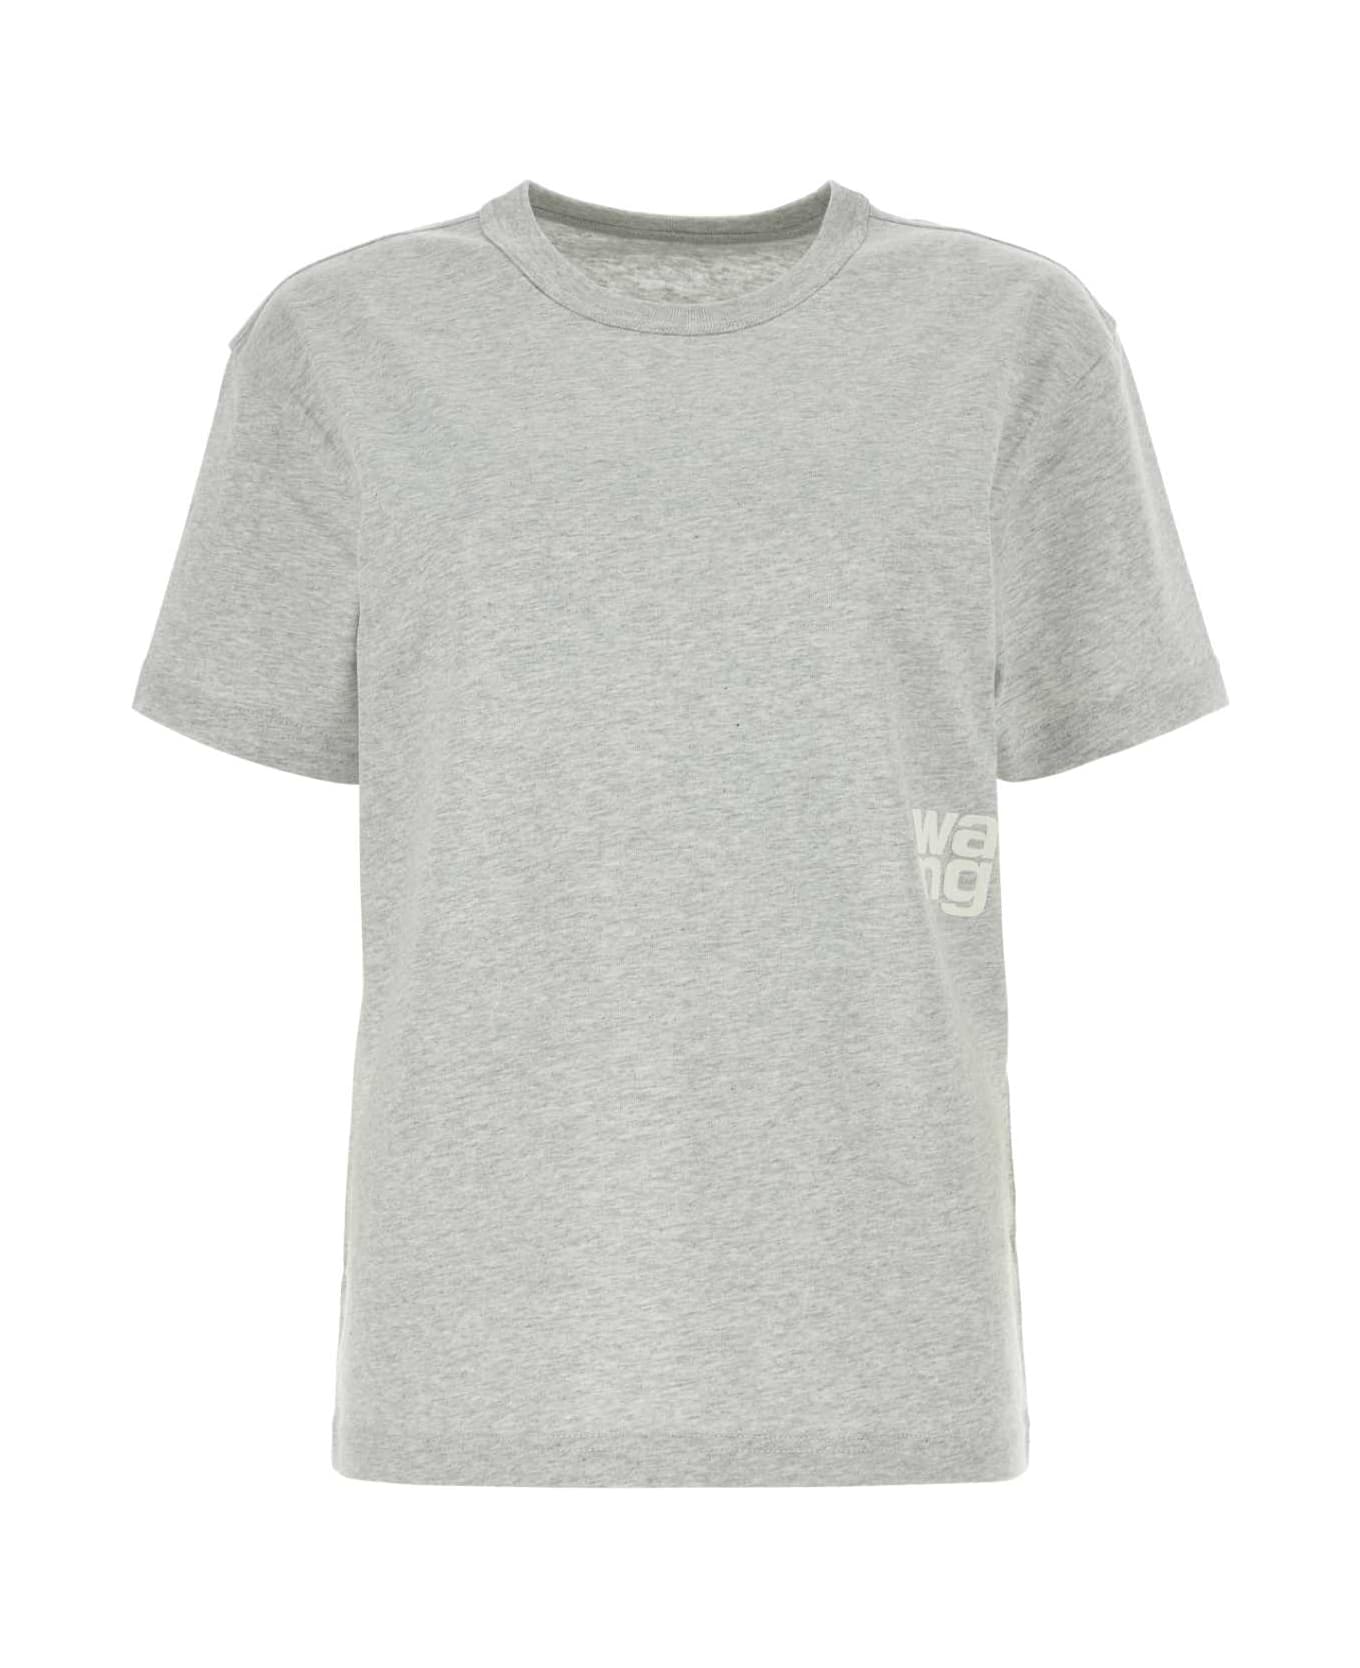 T by Alexander Wang Melange Grey Cotton Oversize T-shirt - LIGHTHEATHERGREY